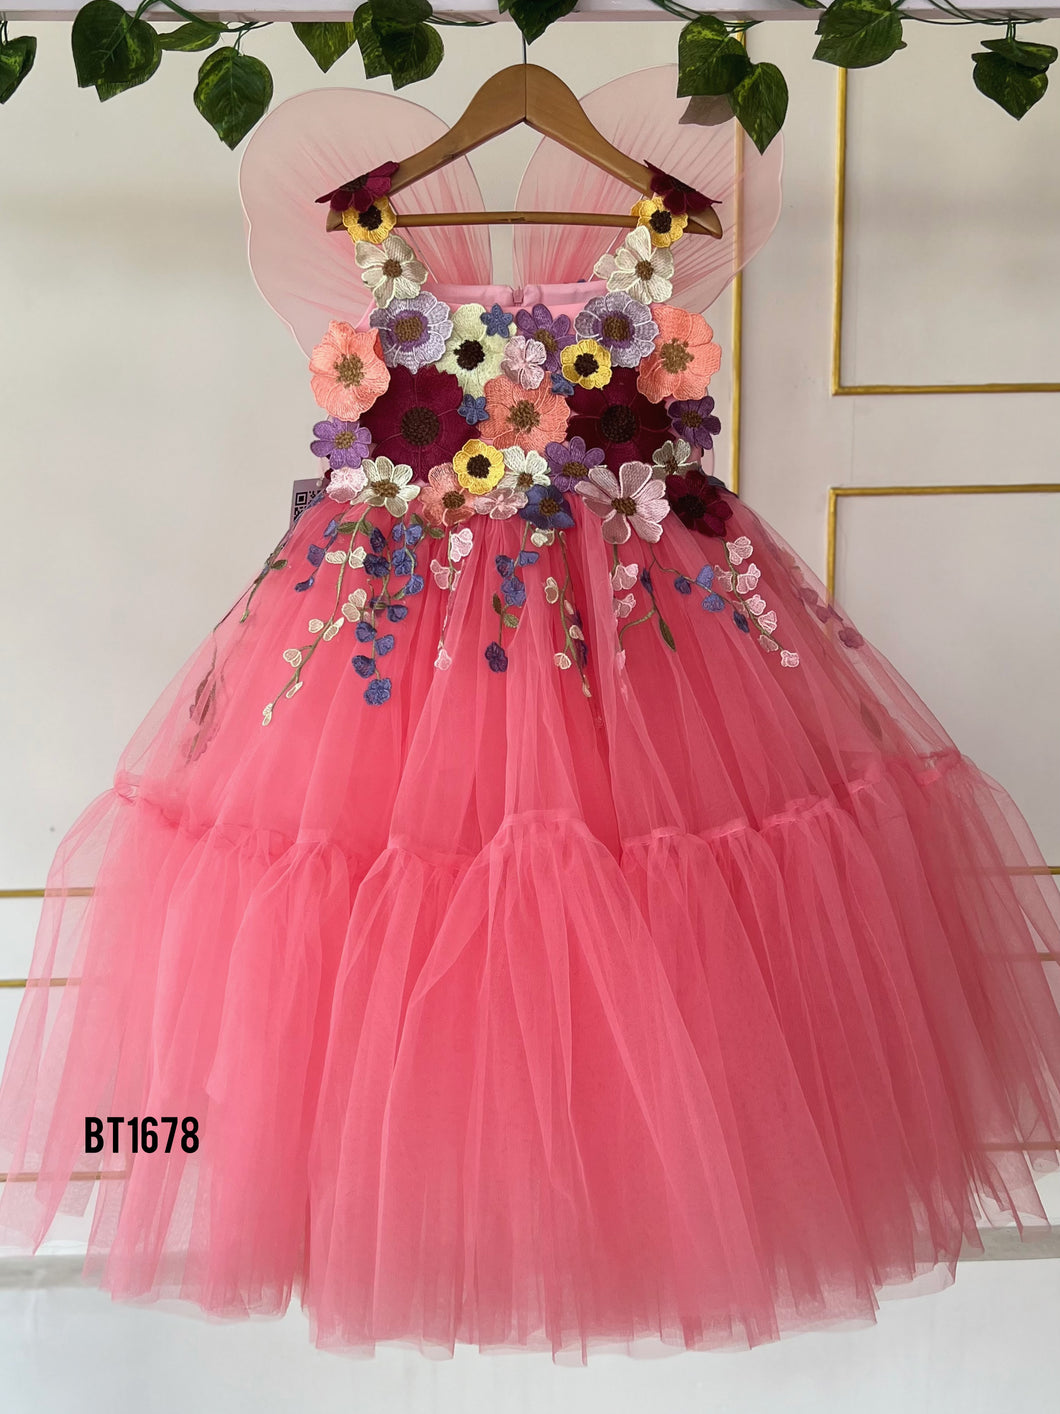 BT1678 Flower Theme Luxury Party Wear with Butterfly Wings